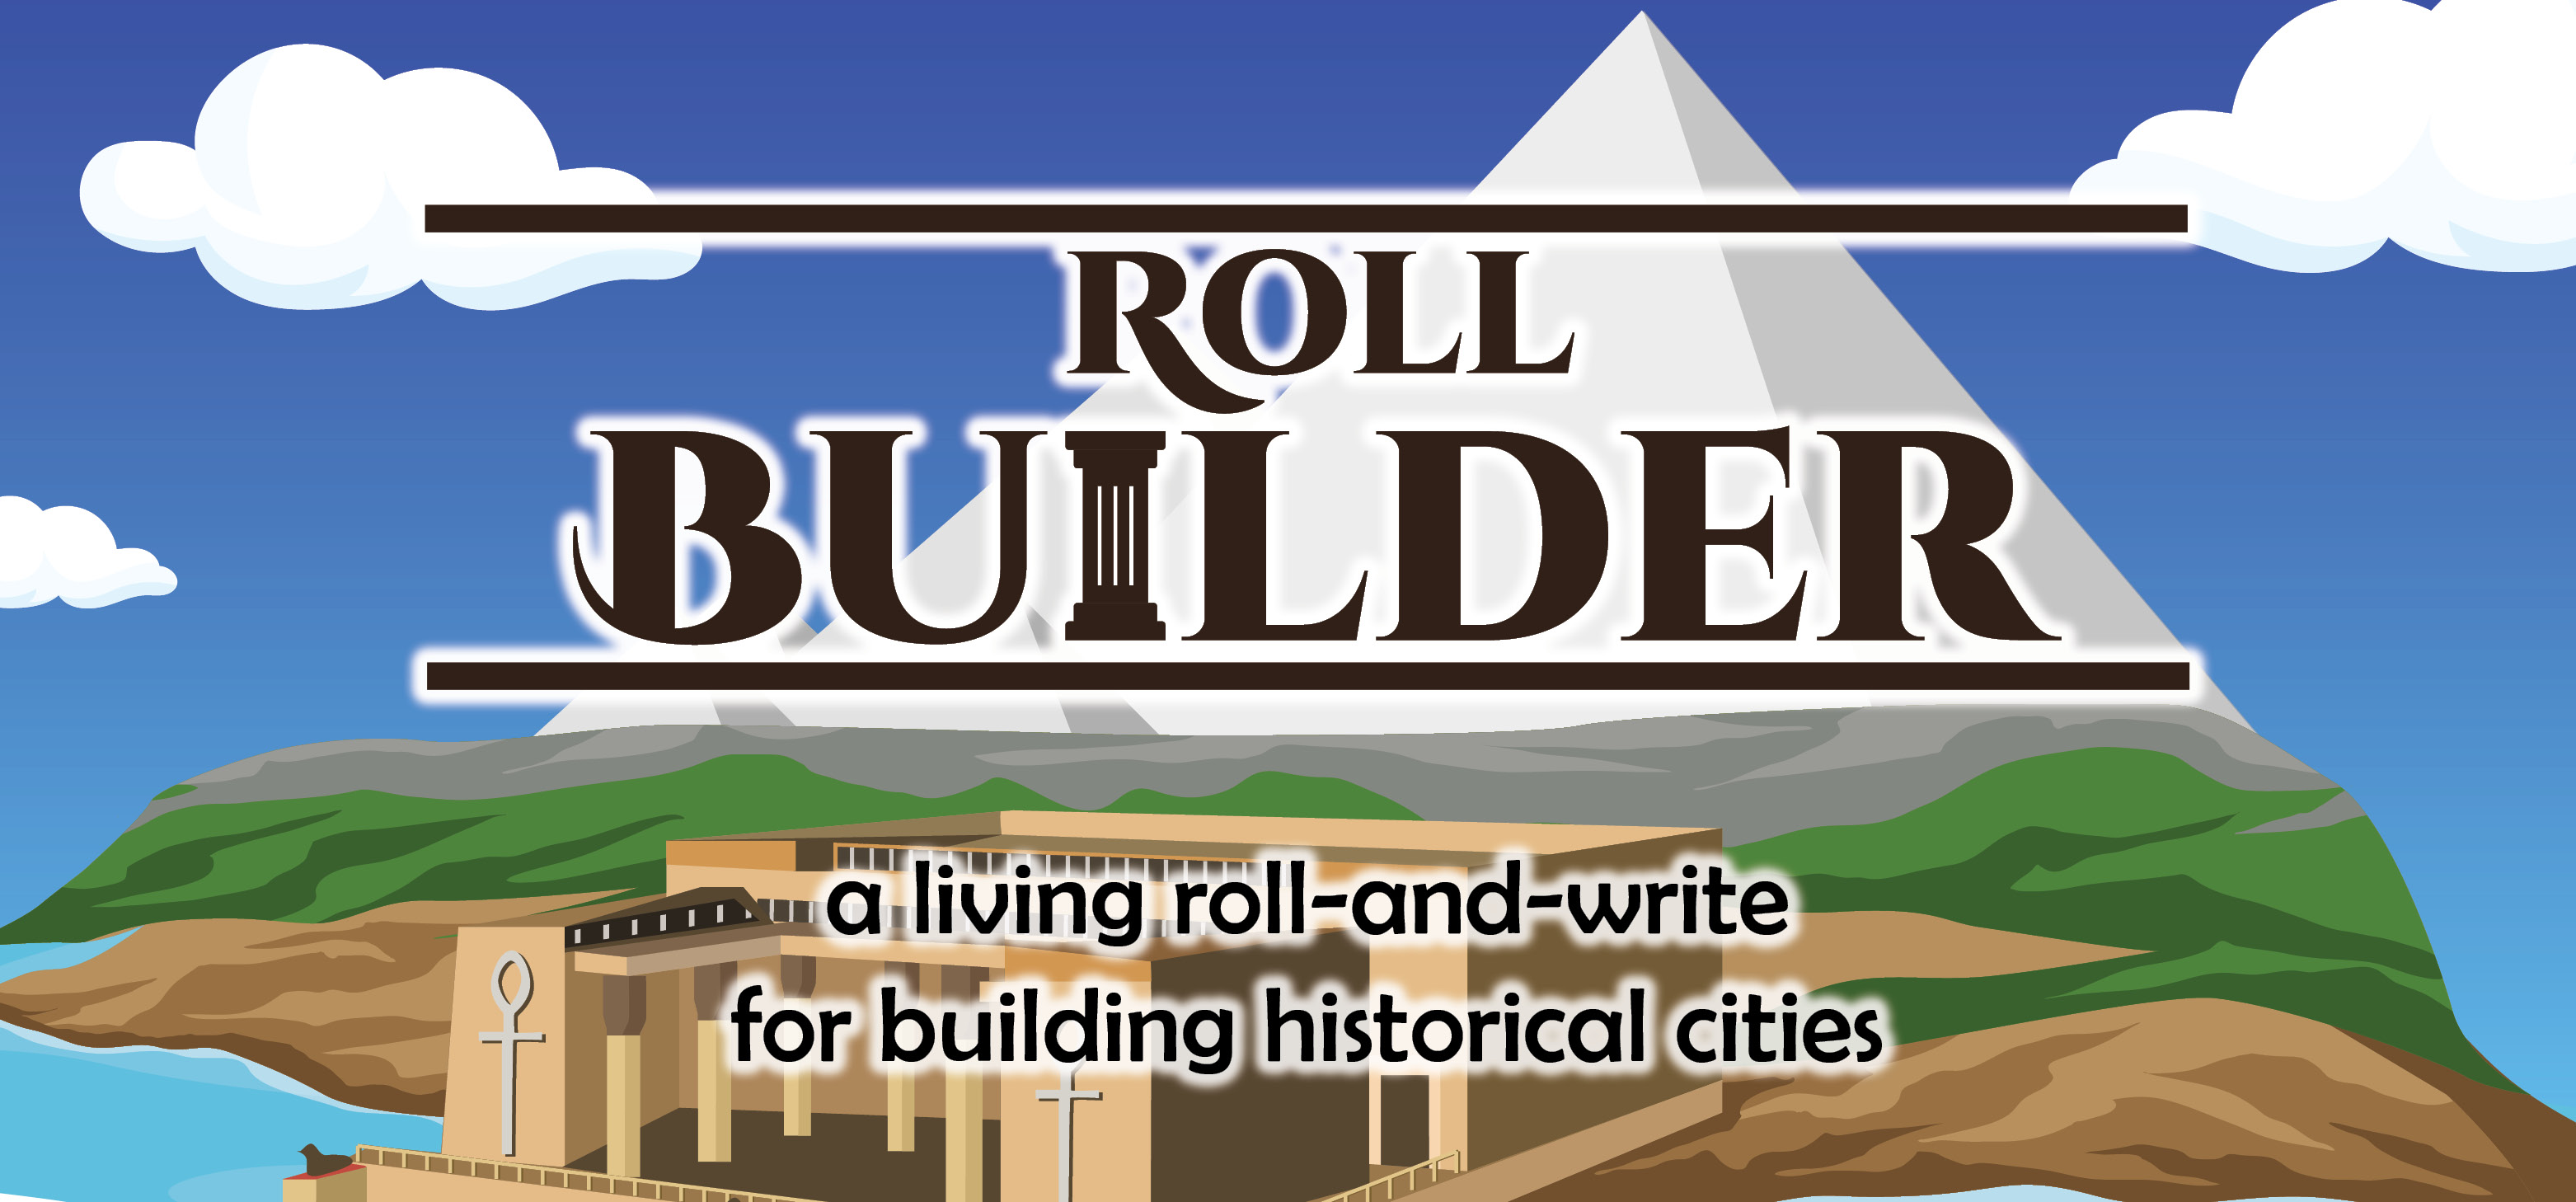 Roll Builder